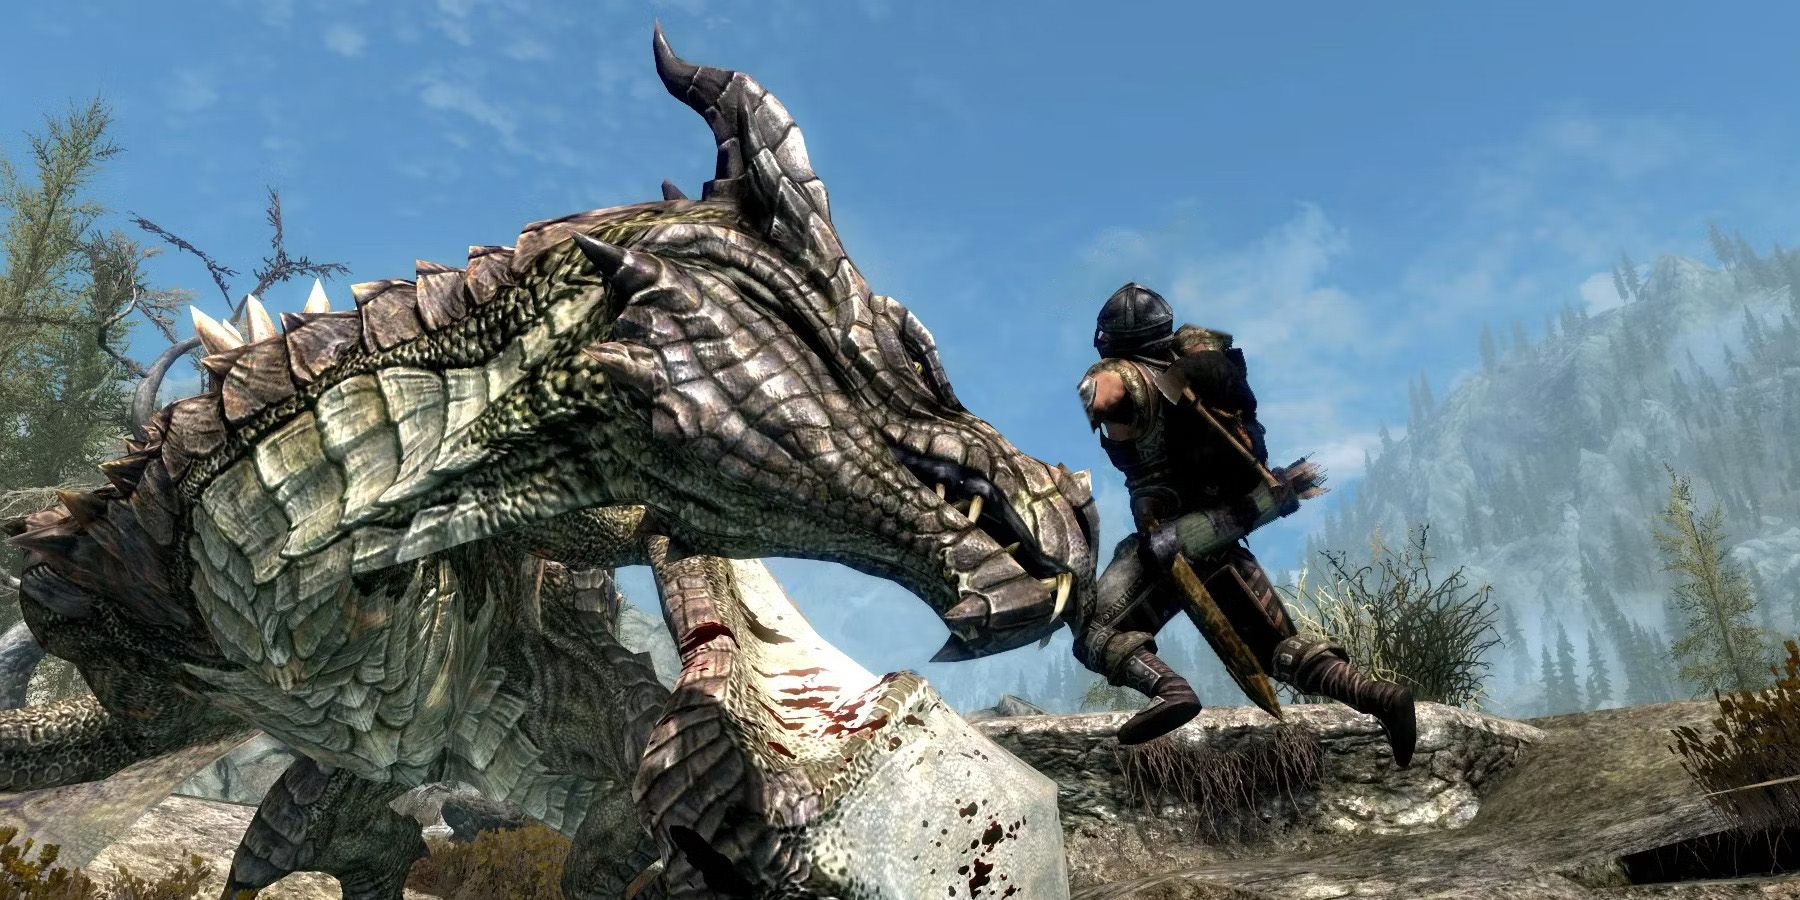 The dragonborn fighting a dragon in Skyrim